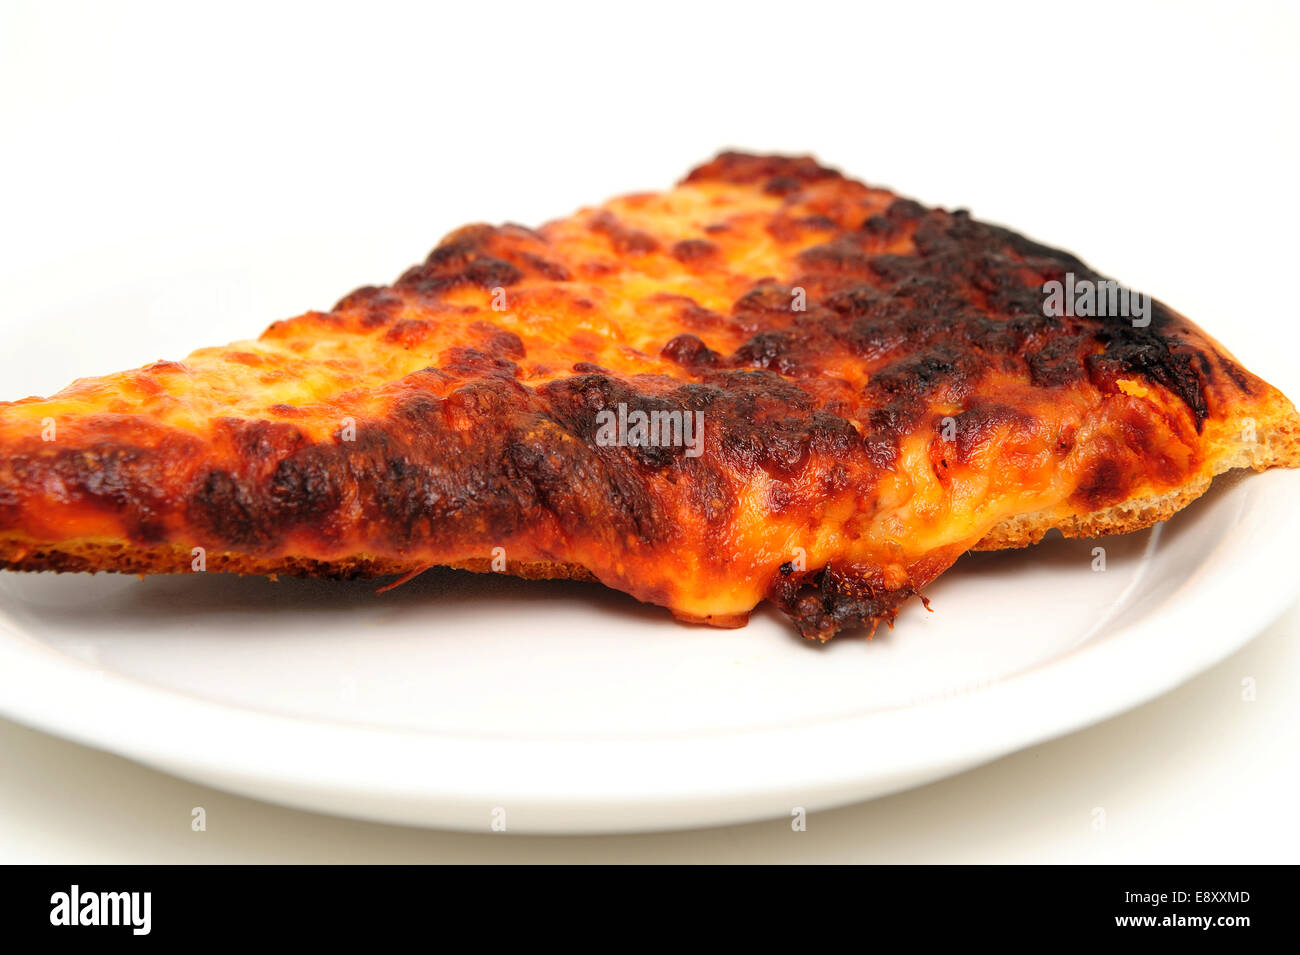 Re-heated Burnt Pizza Stock Photo